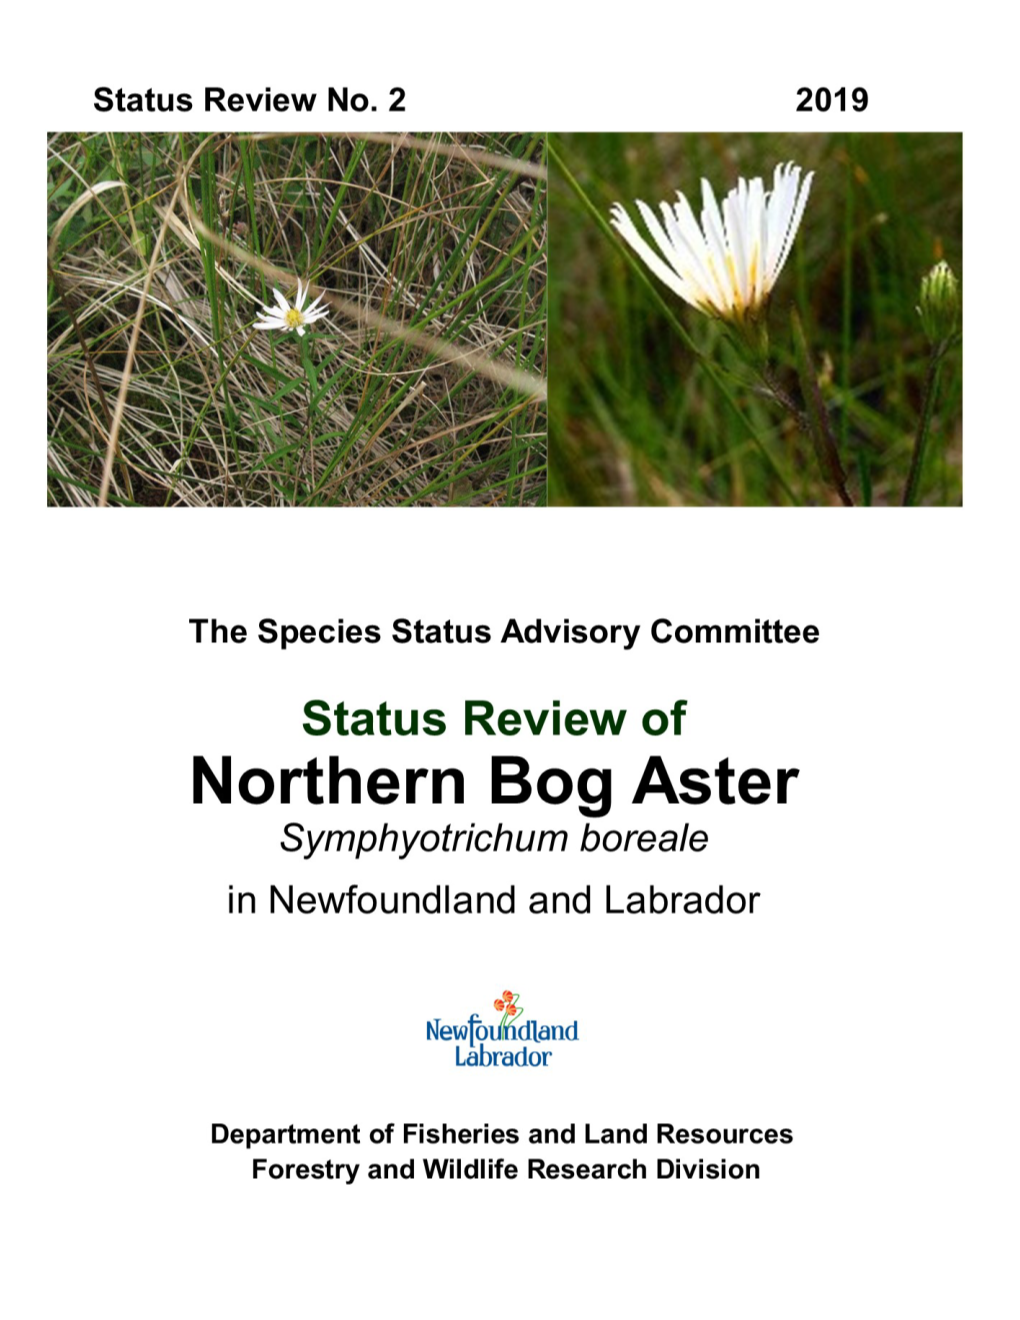 2 Northern-Bog-Aster-SSAC-Status